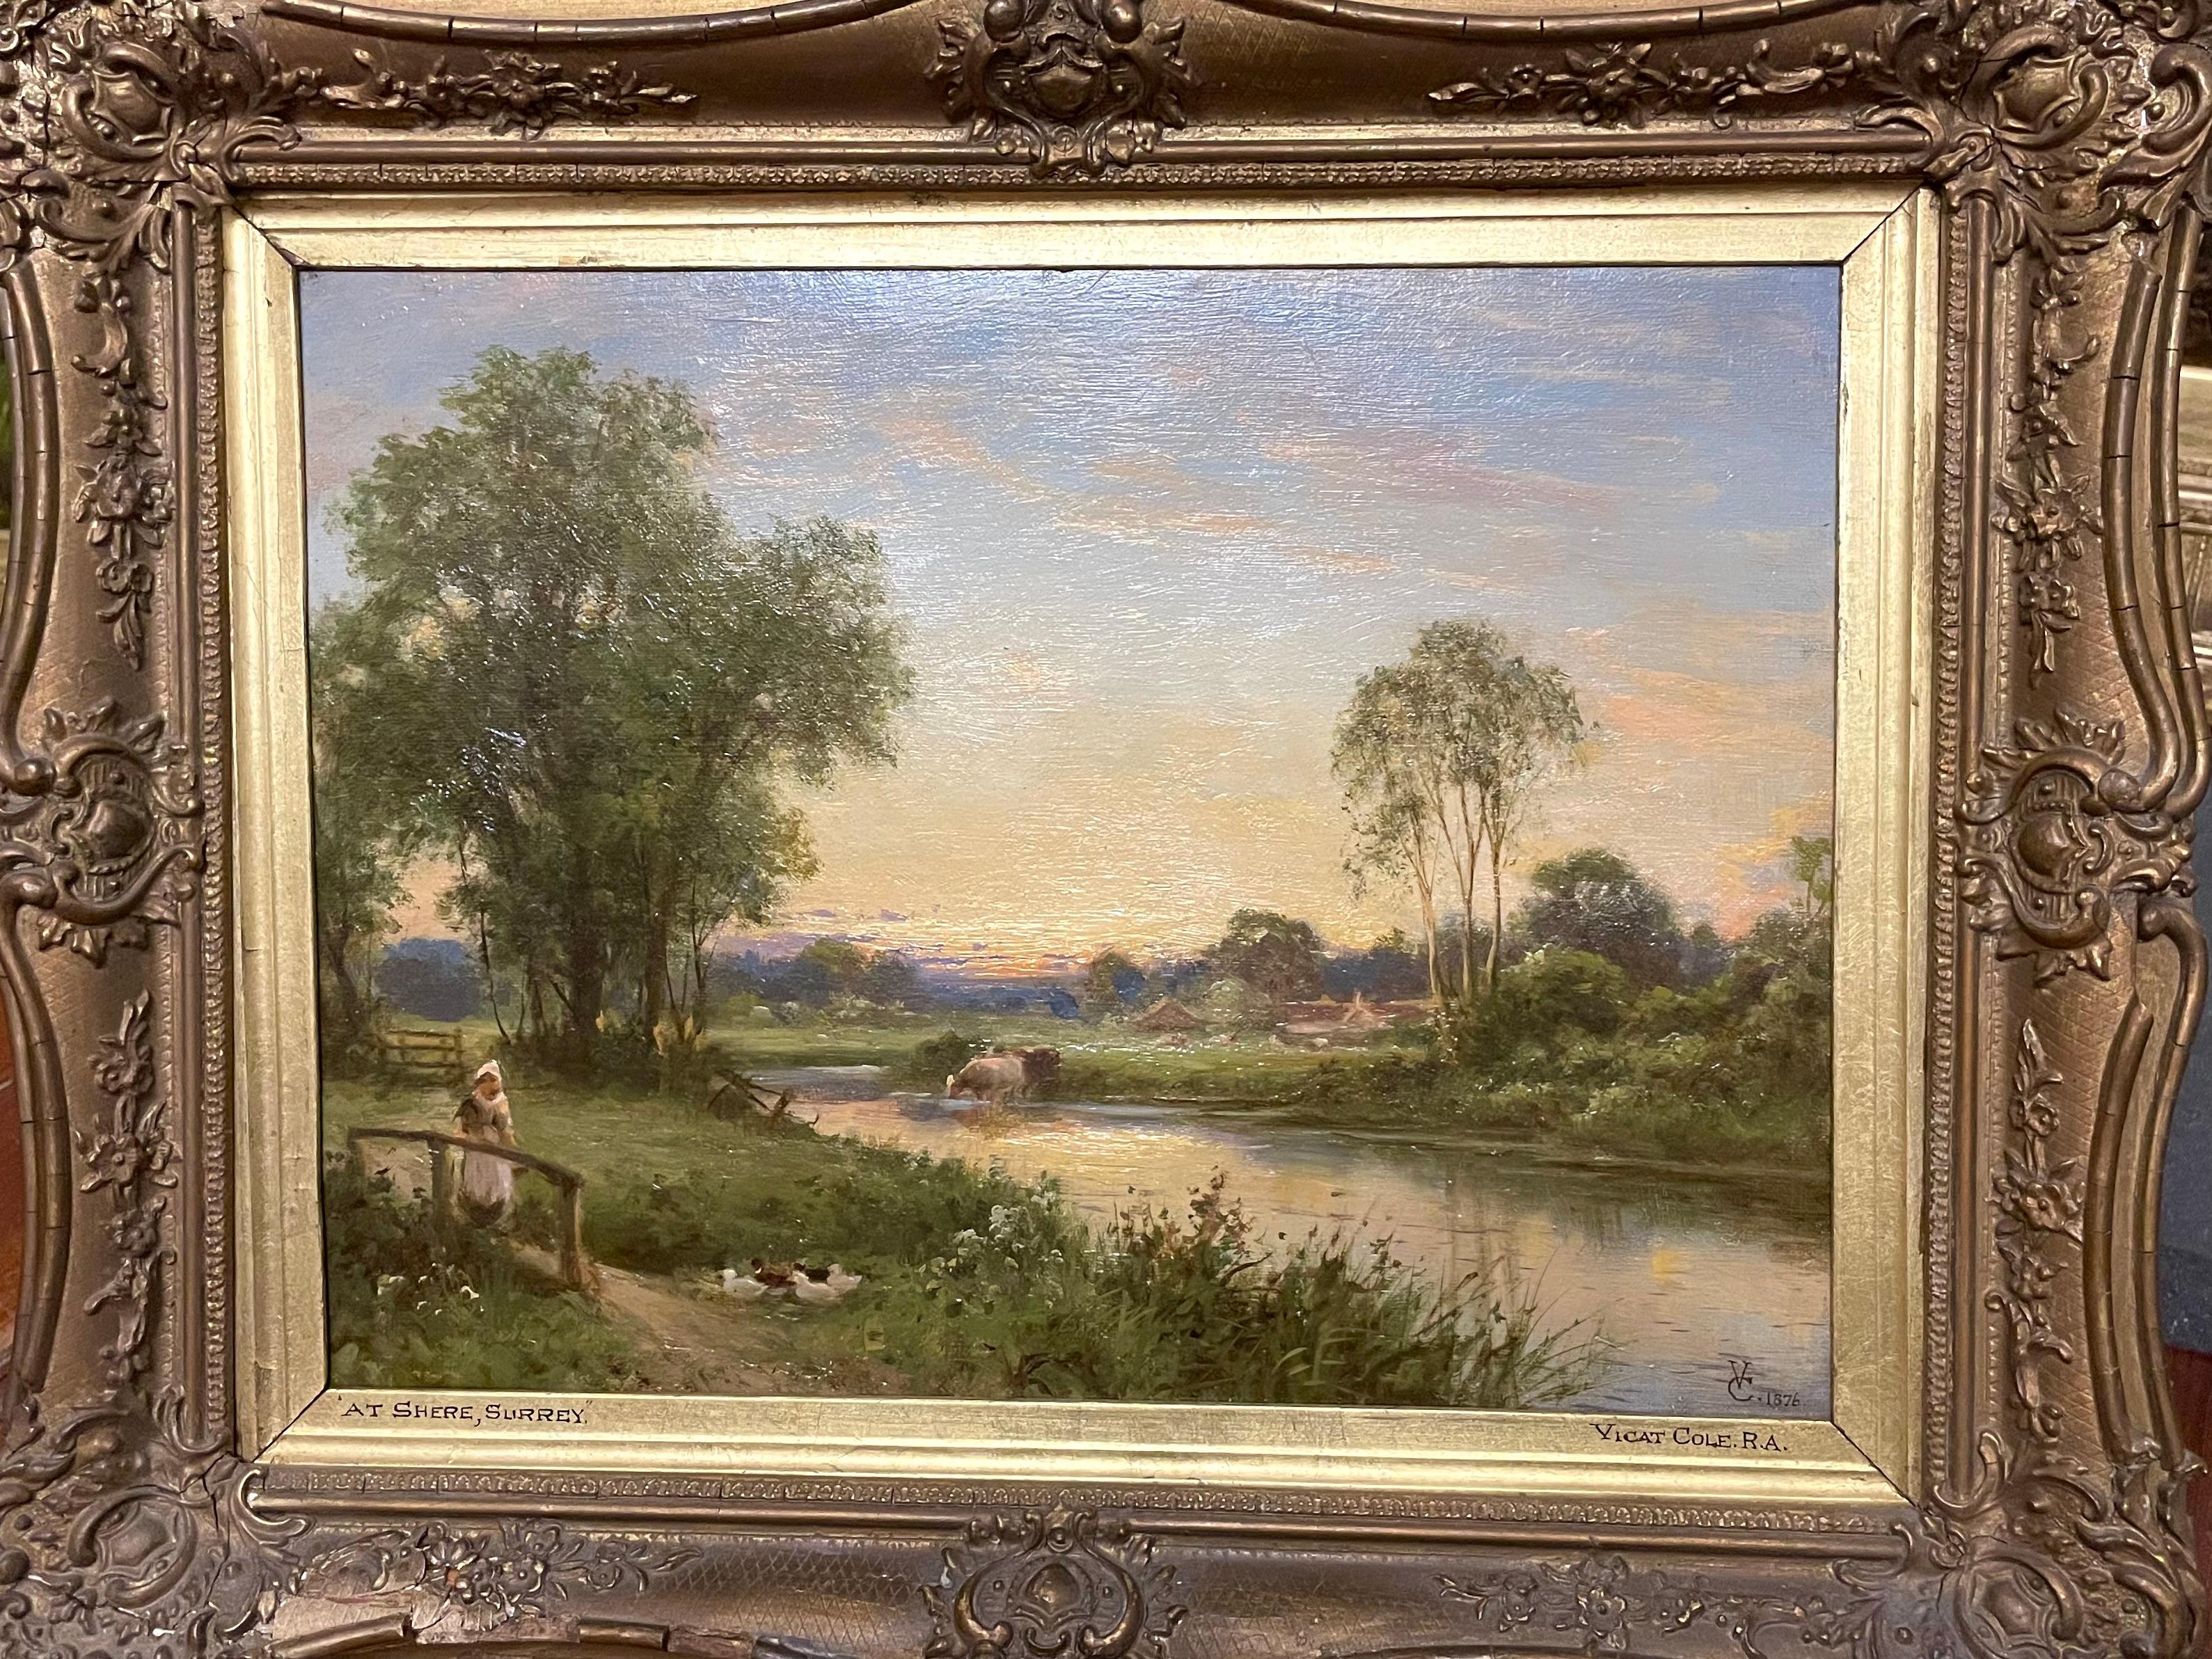 George Vicat Cole RA Landscape Painting - Shere, Surrey, 19th century landscape oil on canvas